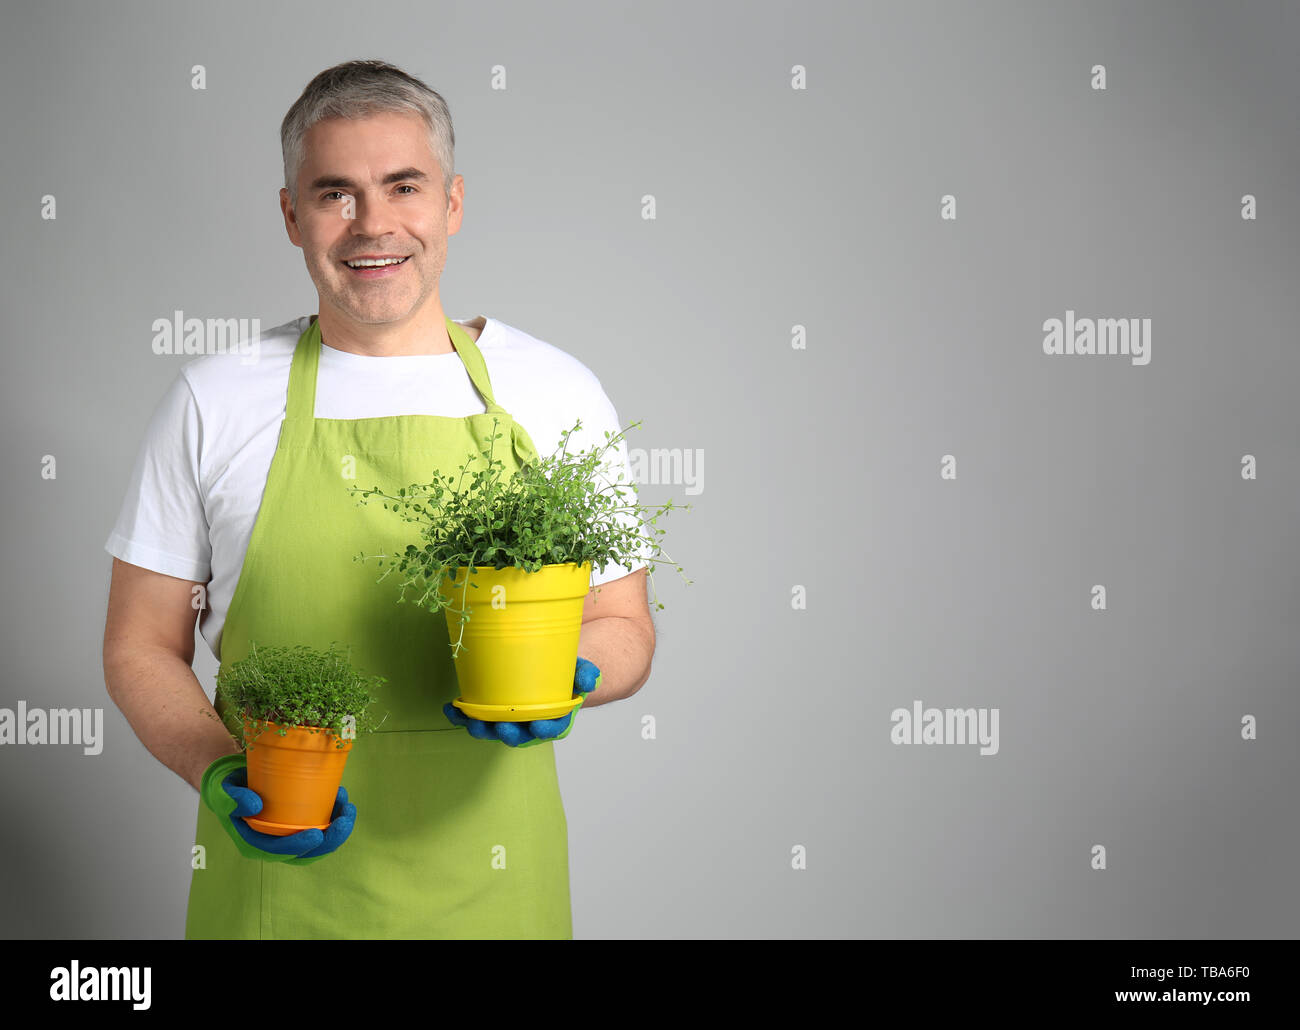 Mature male gardener on grey background Stock Photo